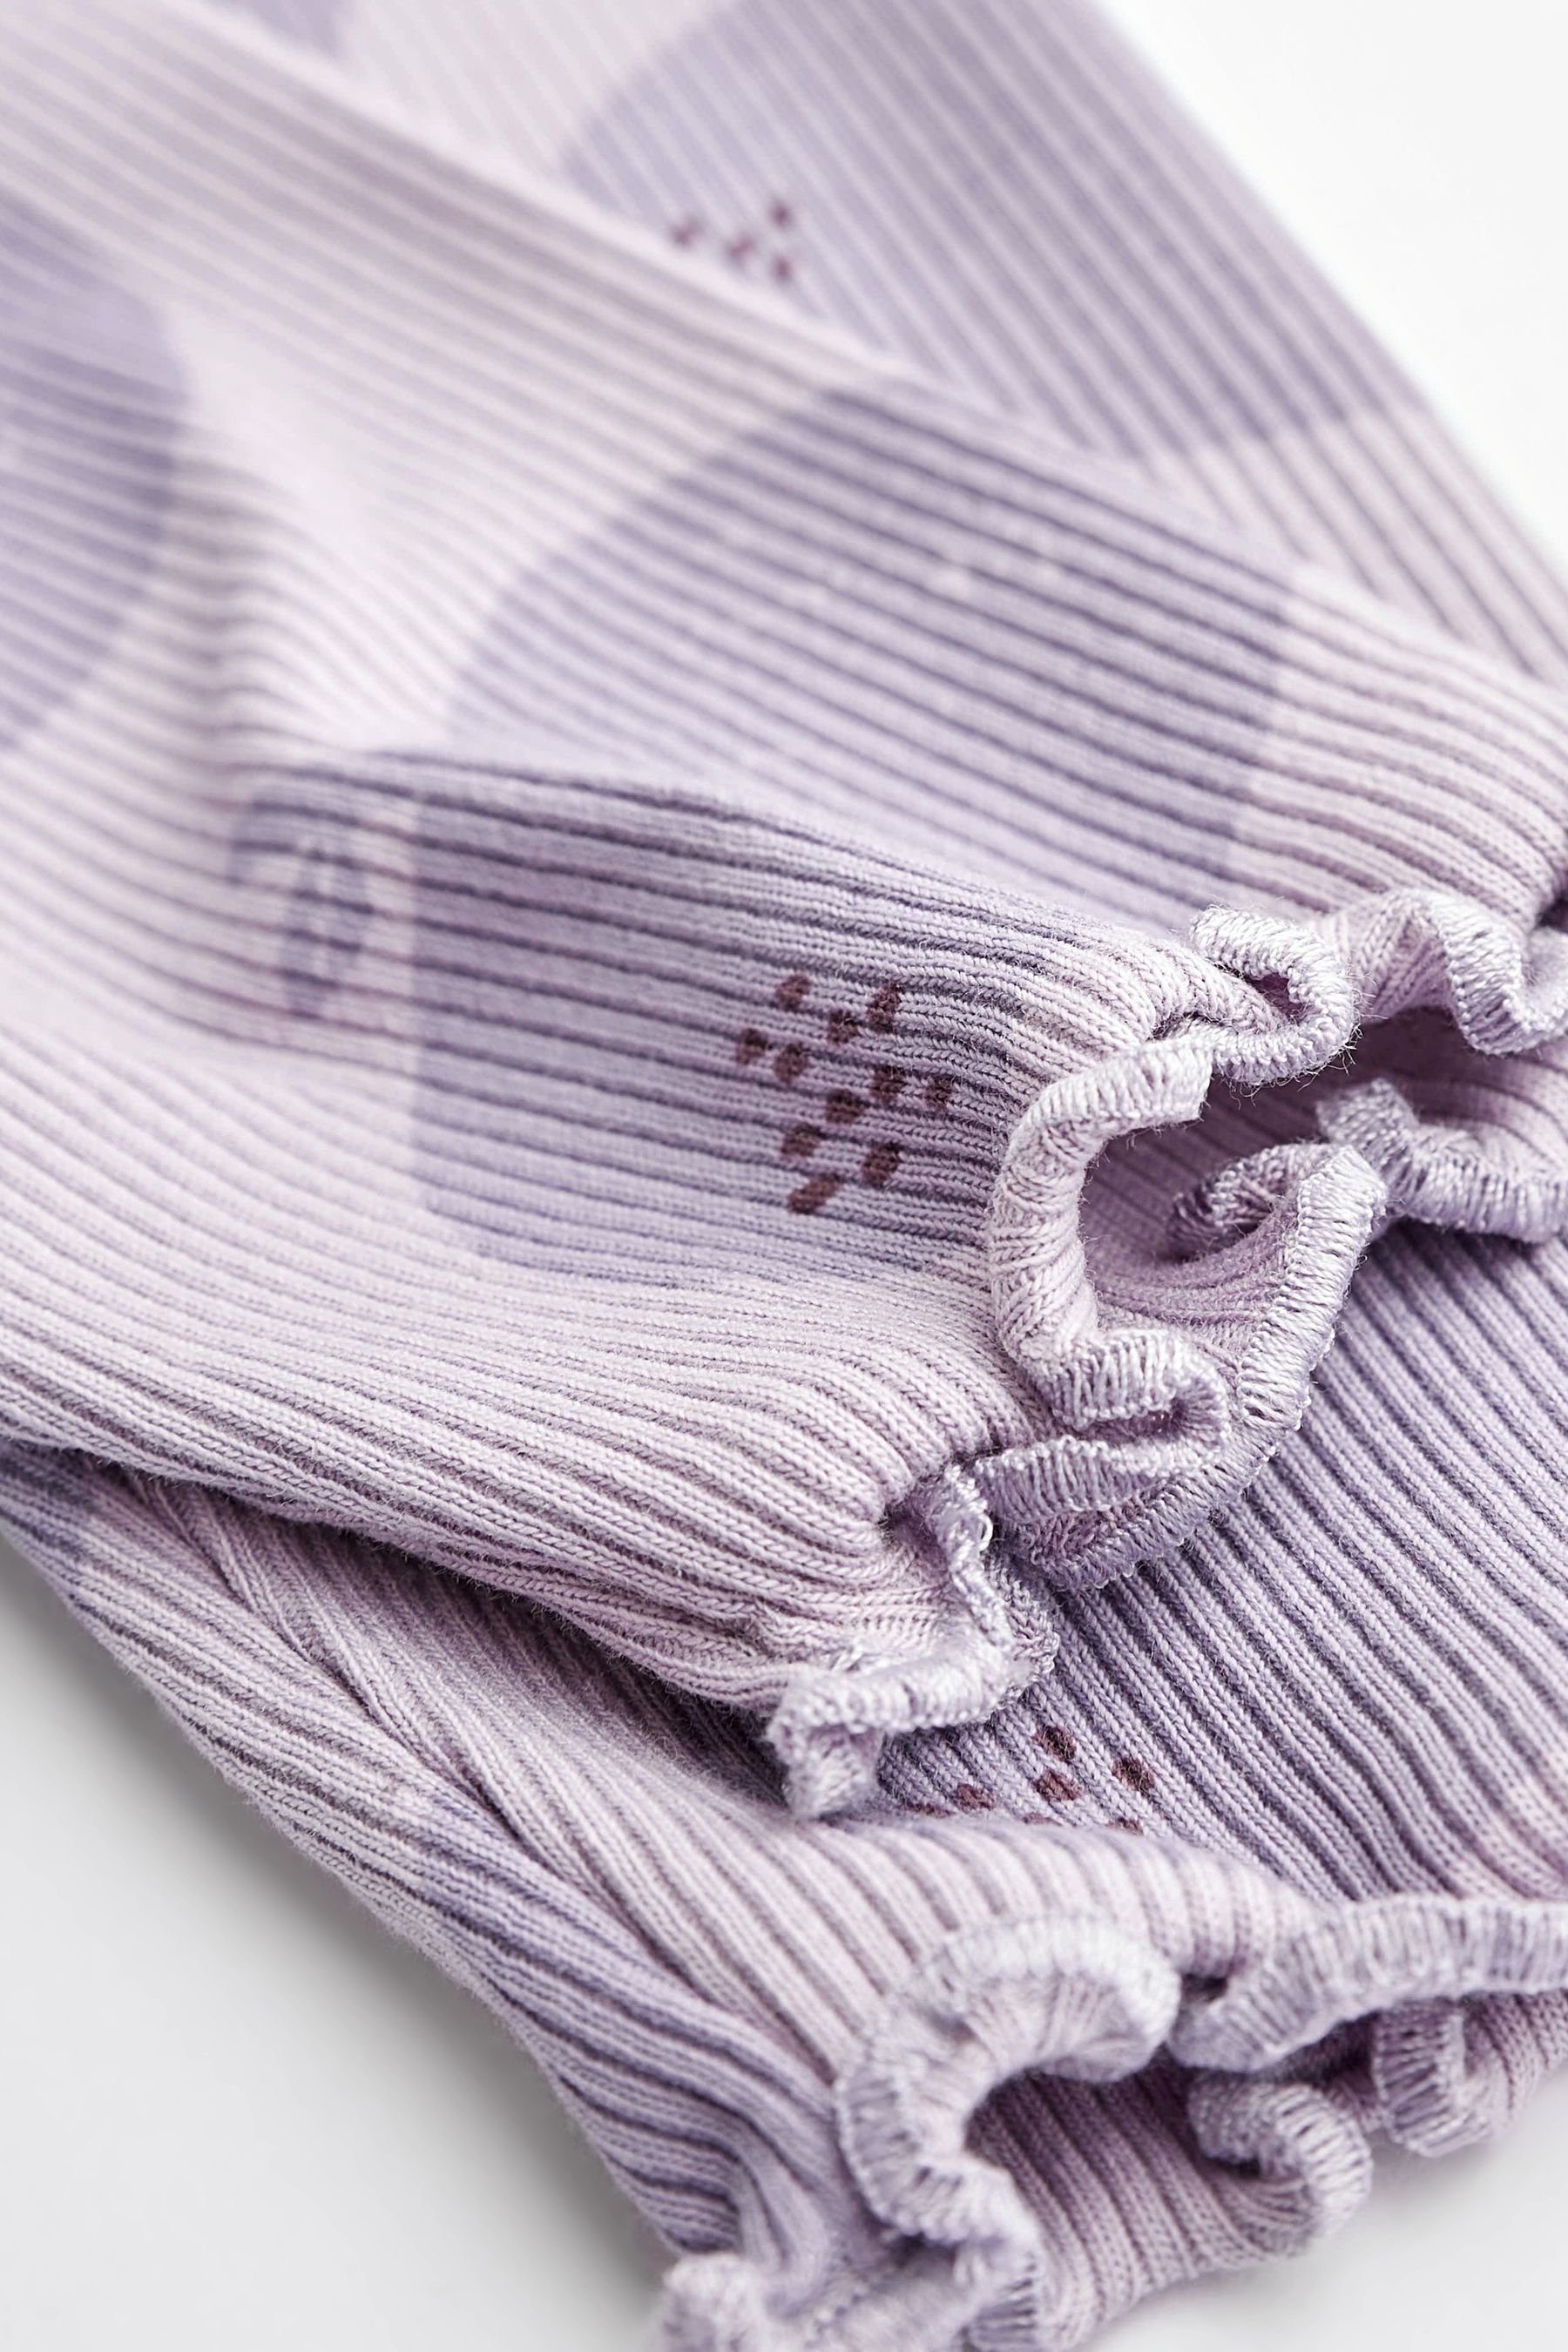 Next Shirt & (2-tlg) Leggings Purple Lilac Leggings 2-teiliges und mit Pullover Baby-Set